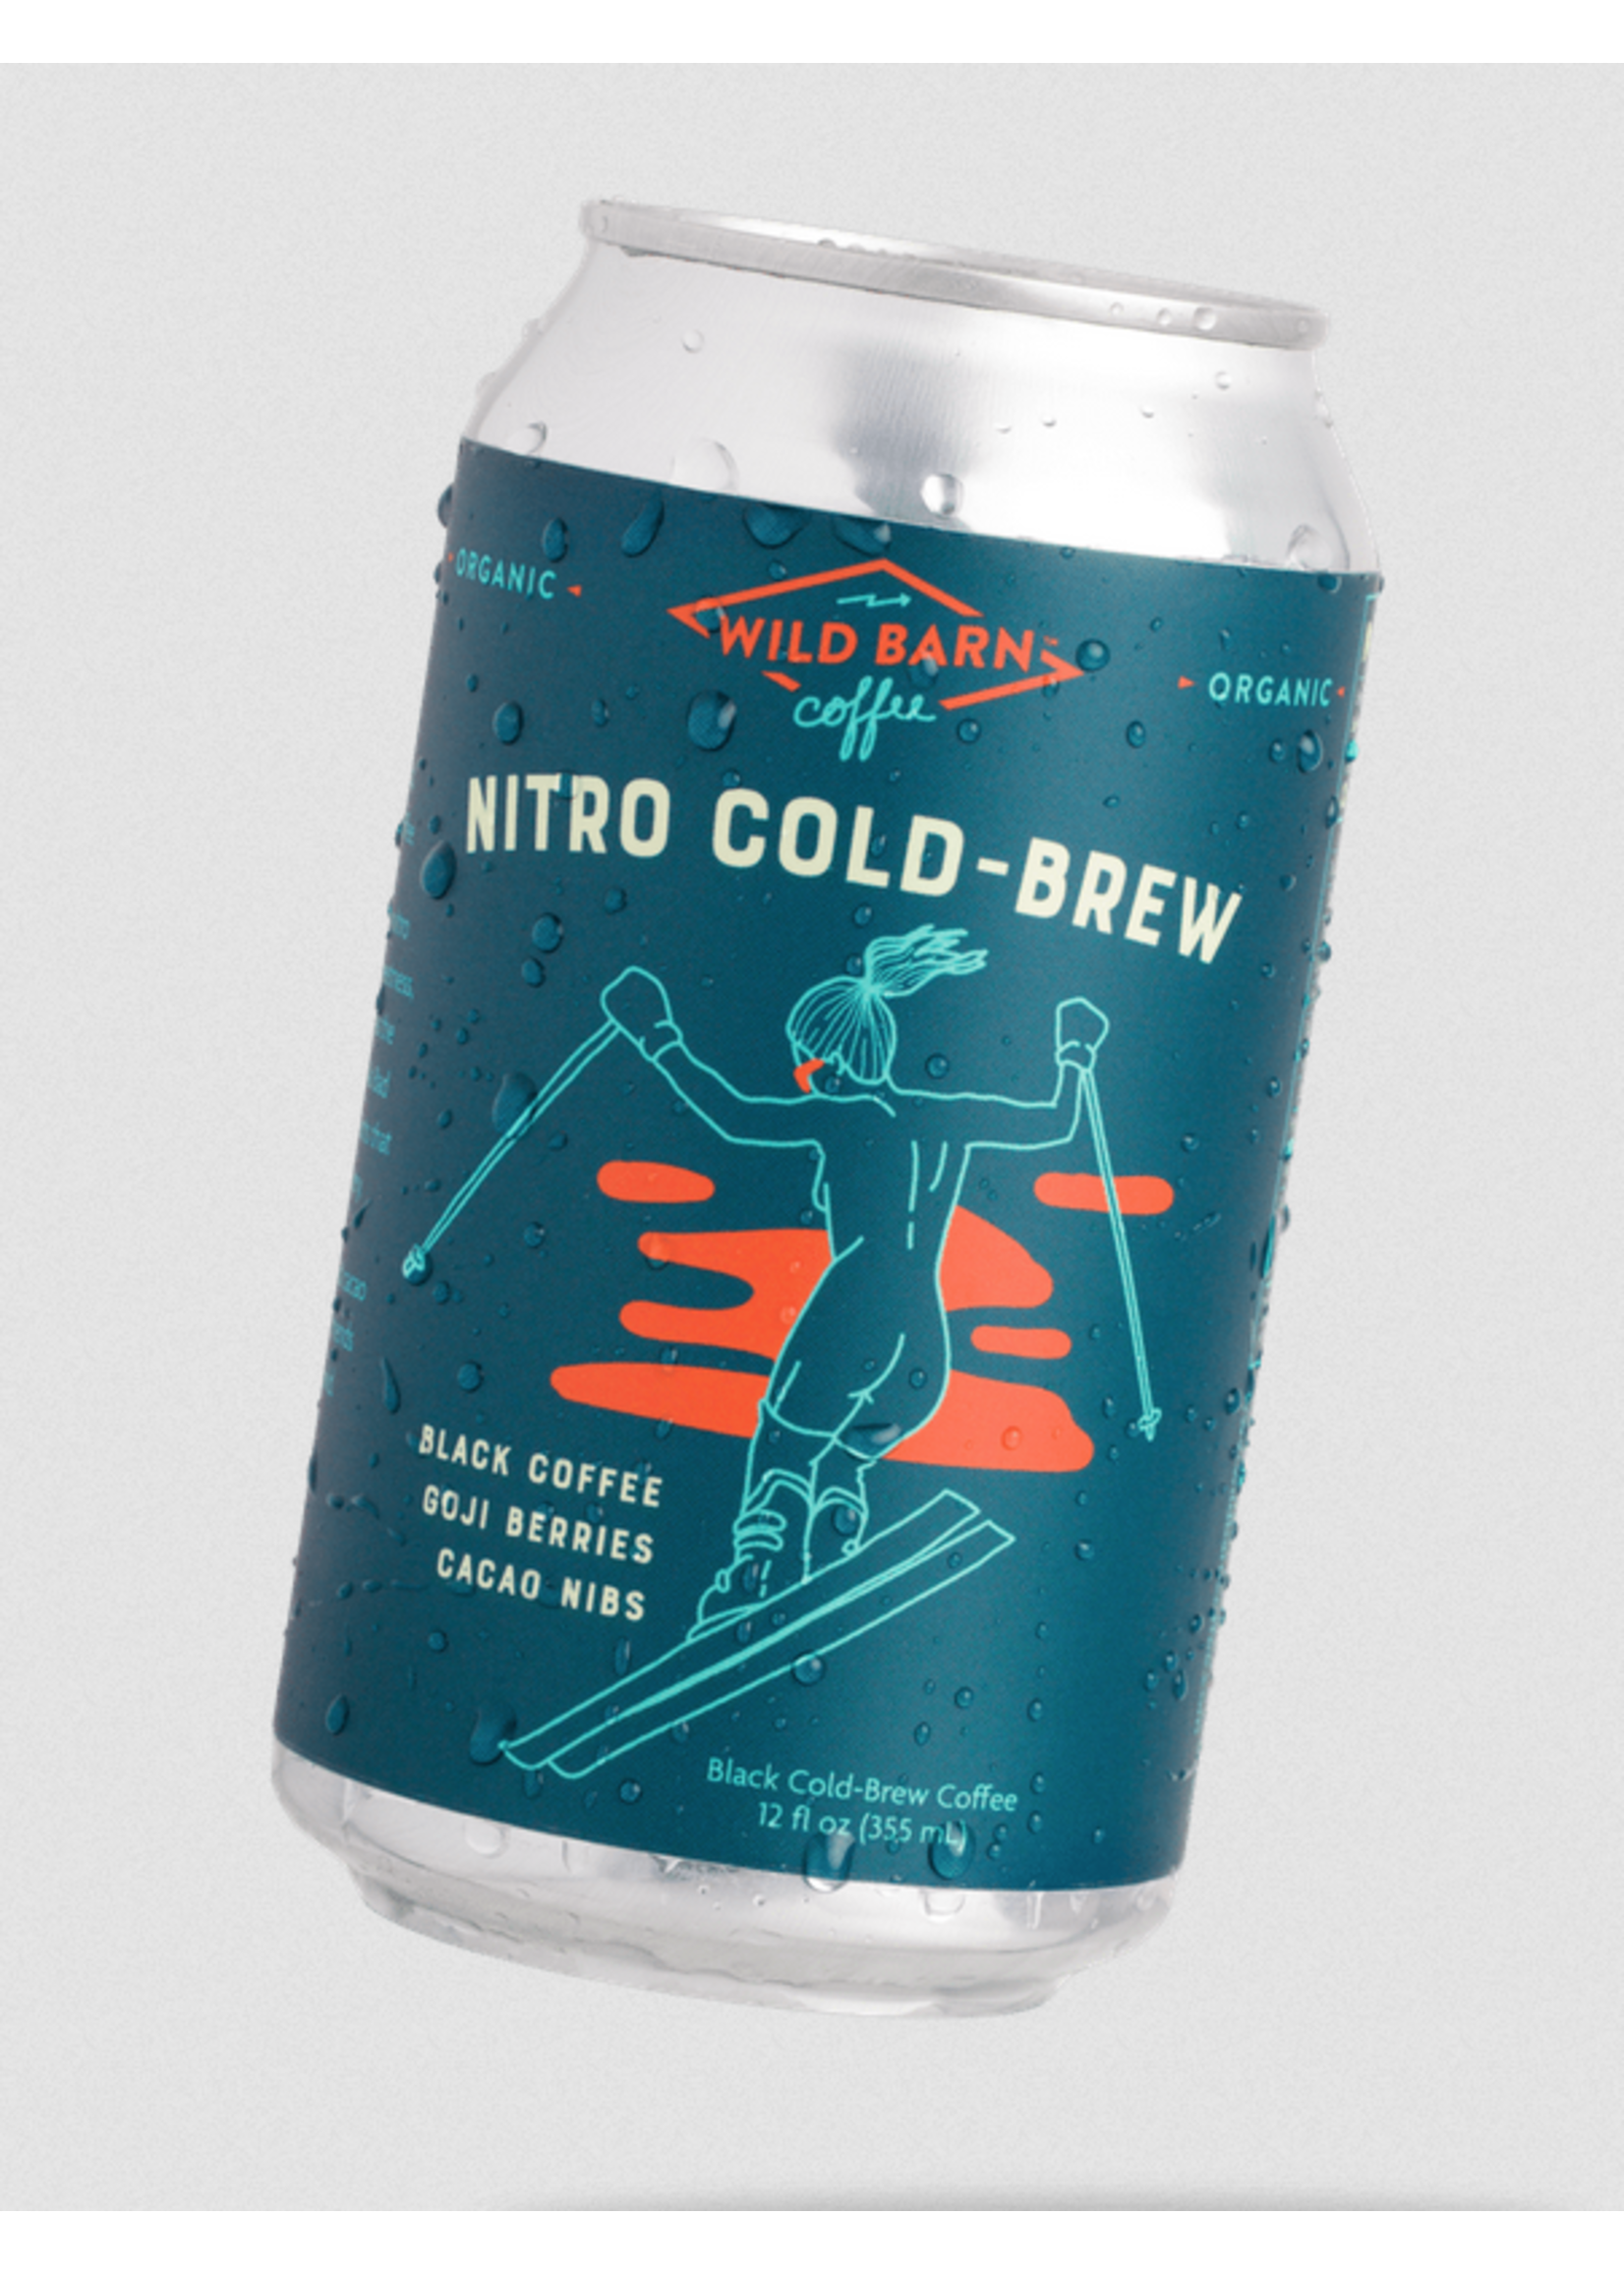 Wild Barn Coffee NA SINGLE - Wild Barn Coffee - Nitro Cold Brew